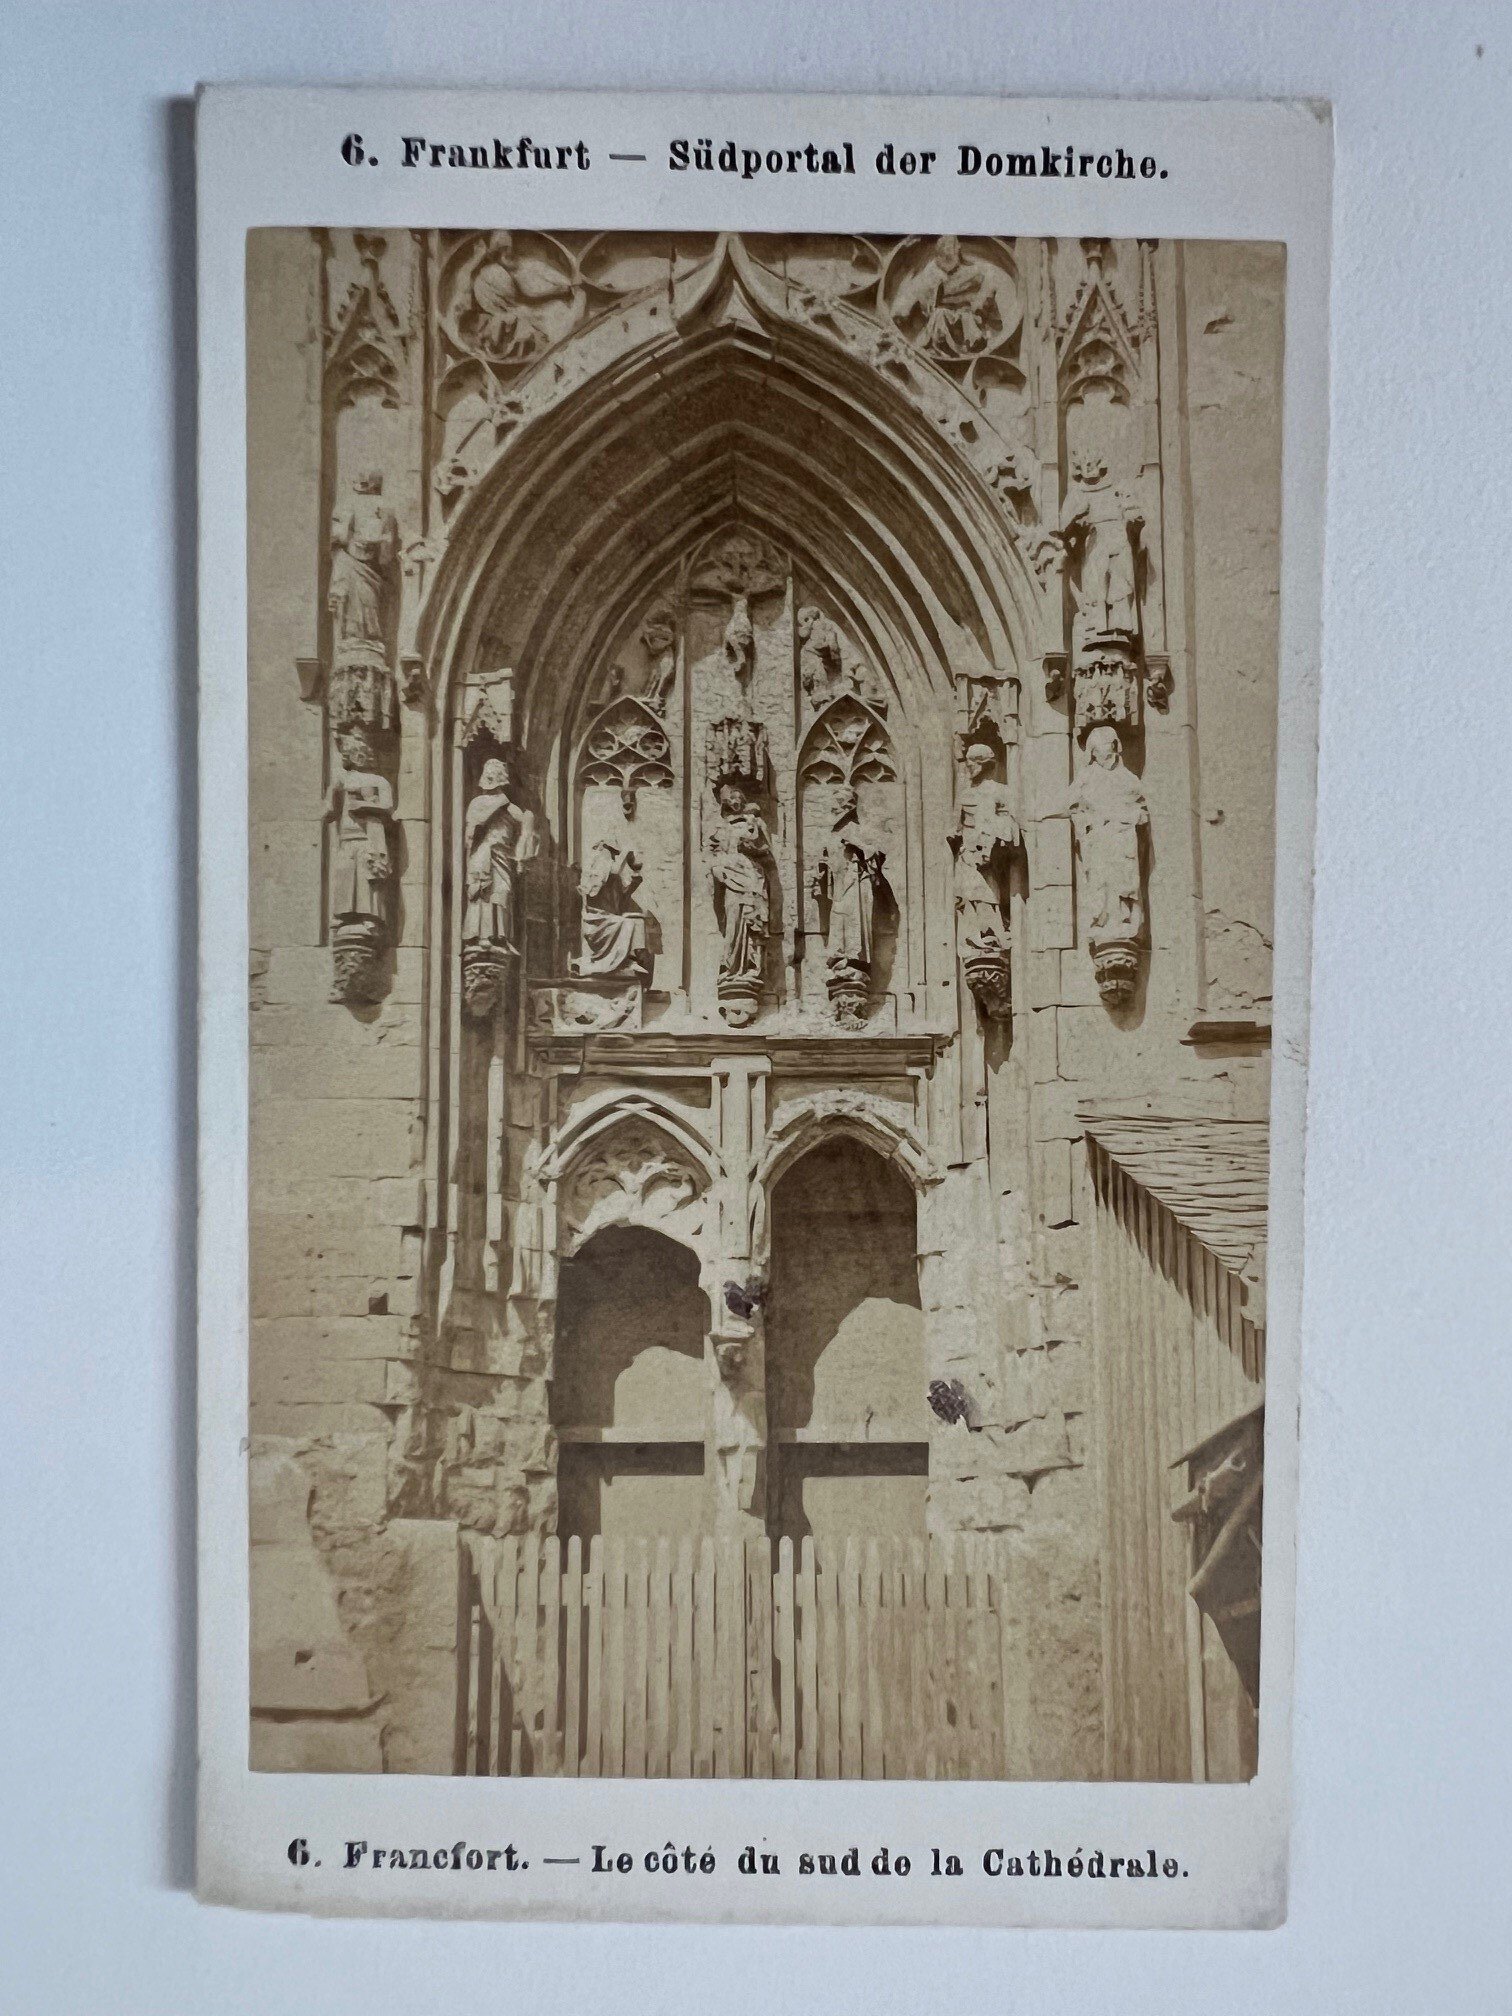 CdV, Frantisek Fridrich, Frankfurt, Nr. 6, Le cote du sud de la Cathedrale, ca. 1875. (Taunus-Rhein-Main - Regionalgeschichtliche Sammlung Dr. Stefan Naas CC BY-NC-SA)